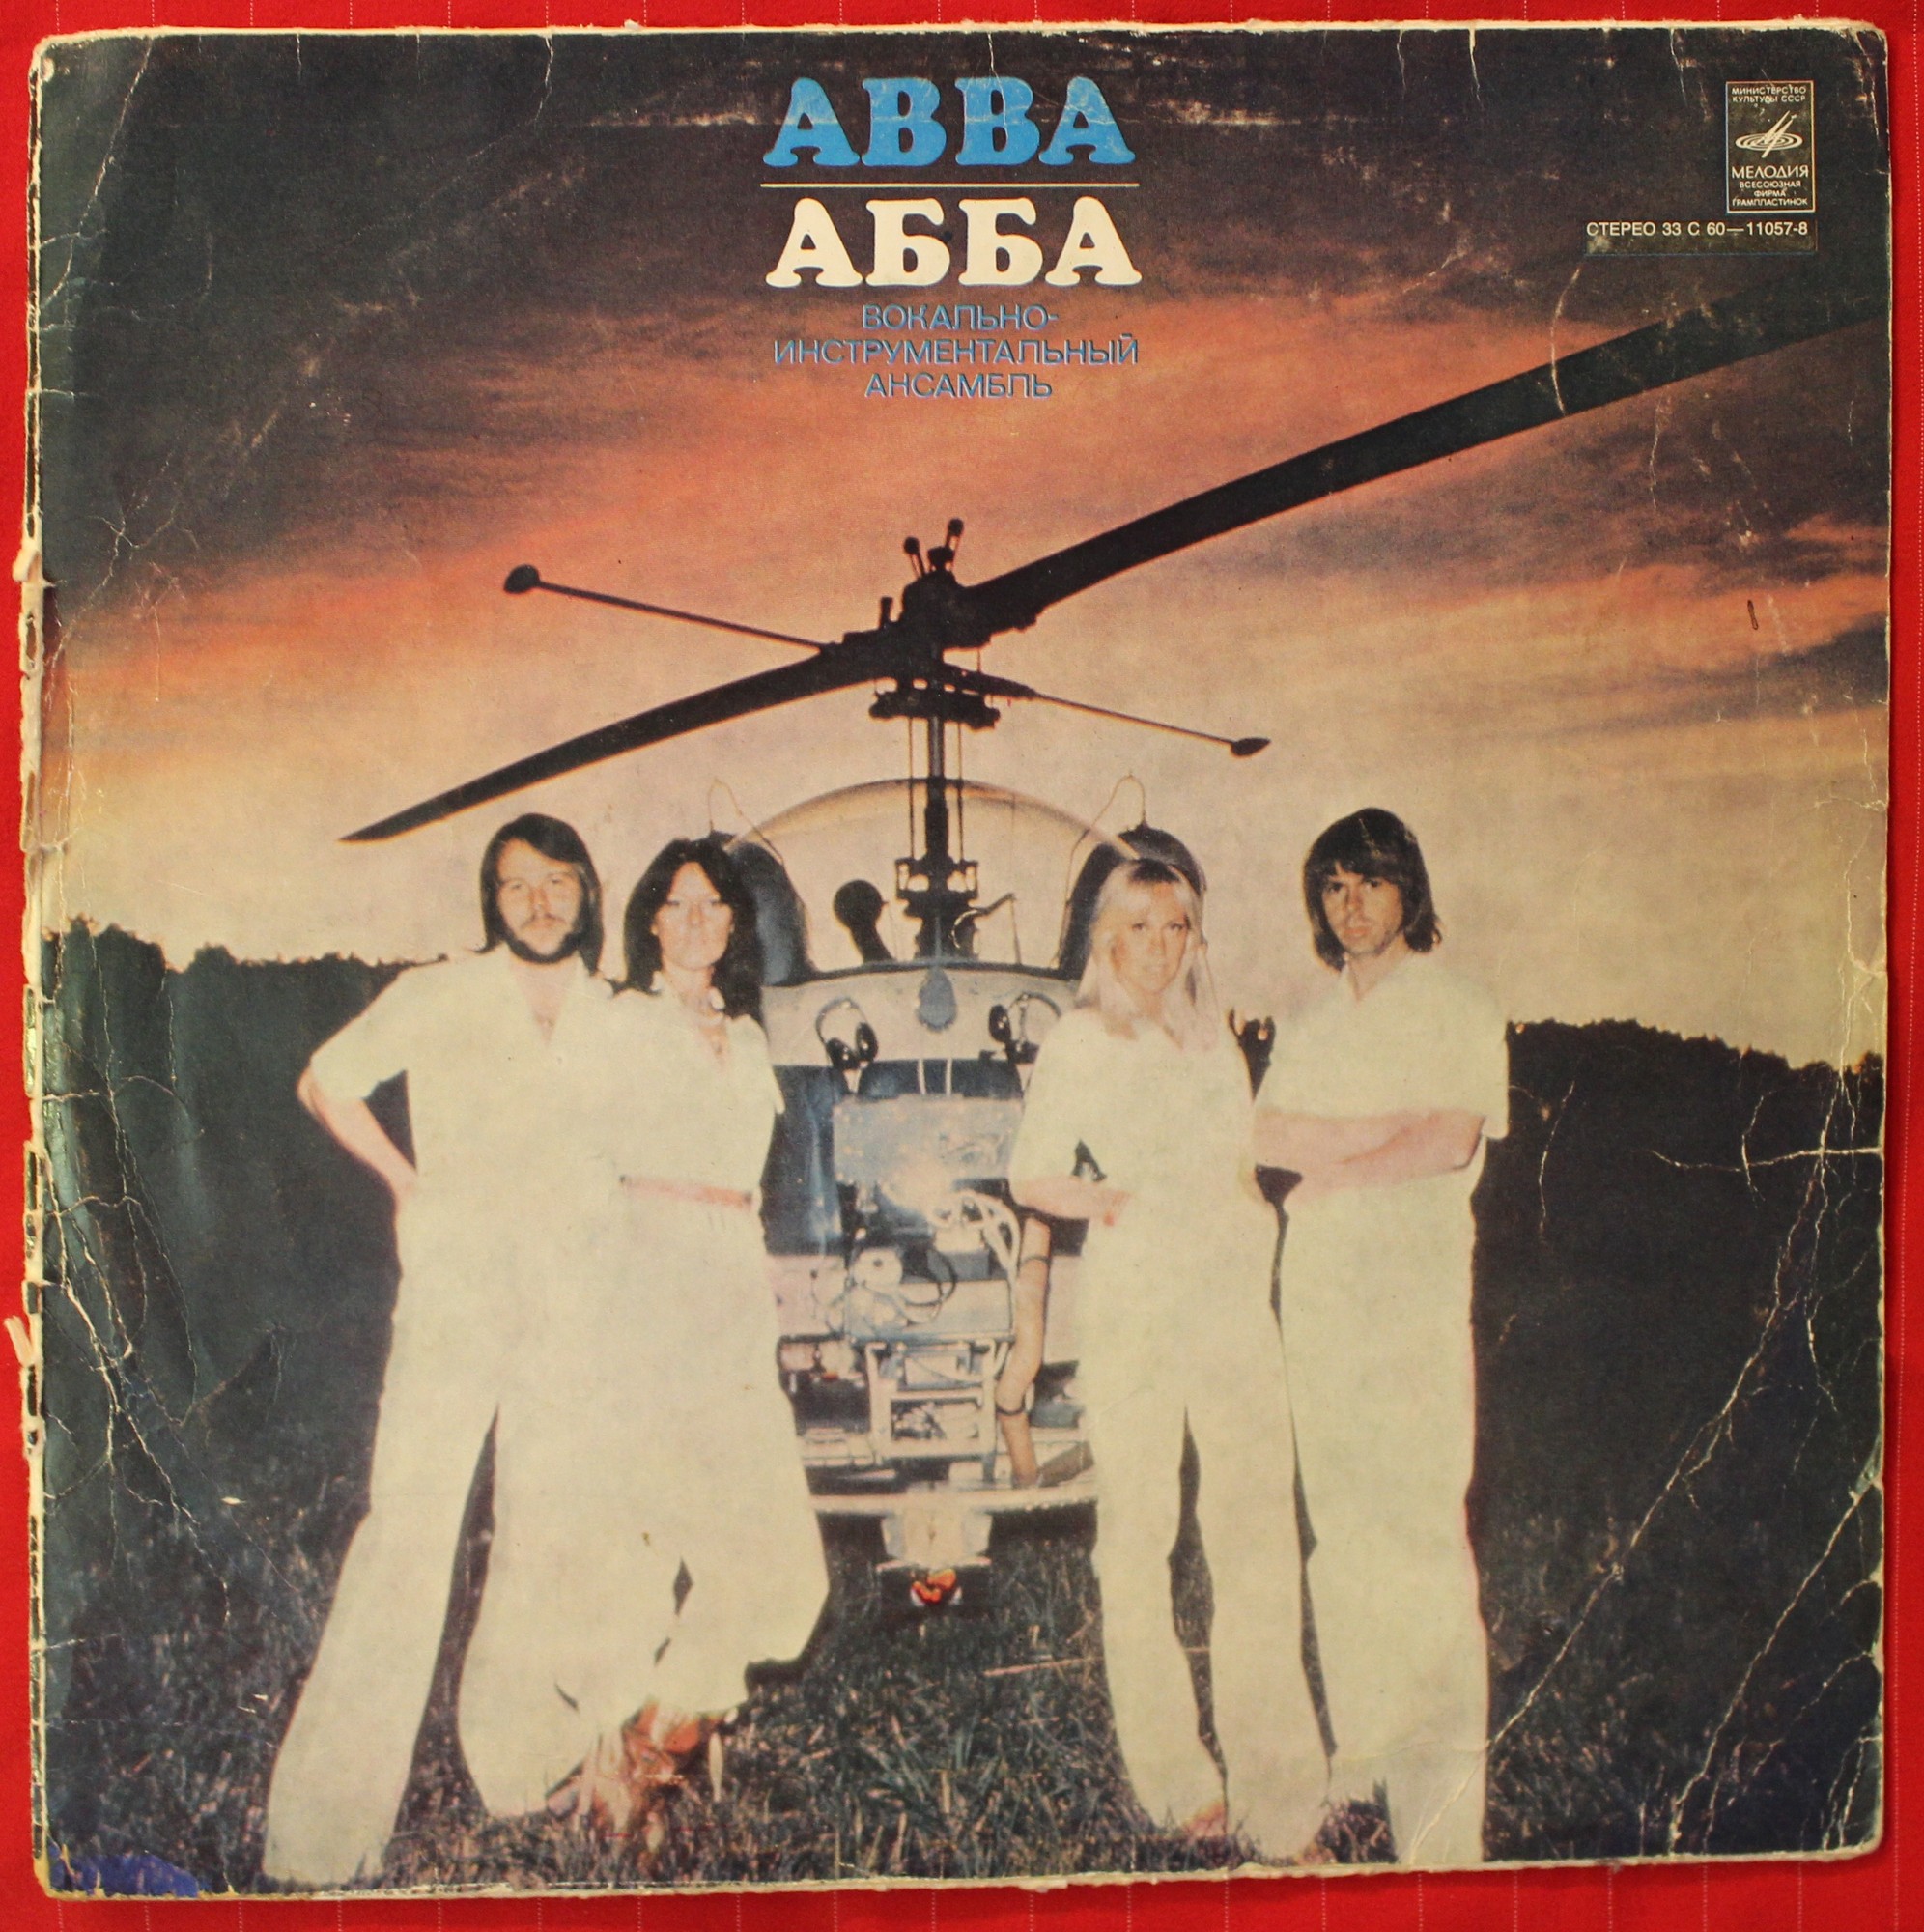 ВИА "АББА" (ABBA "Arrival")